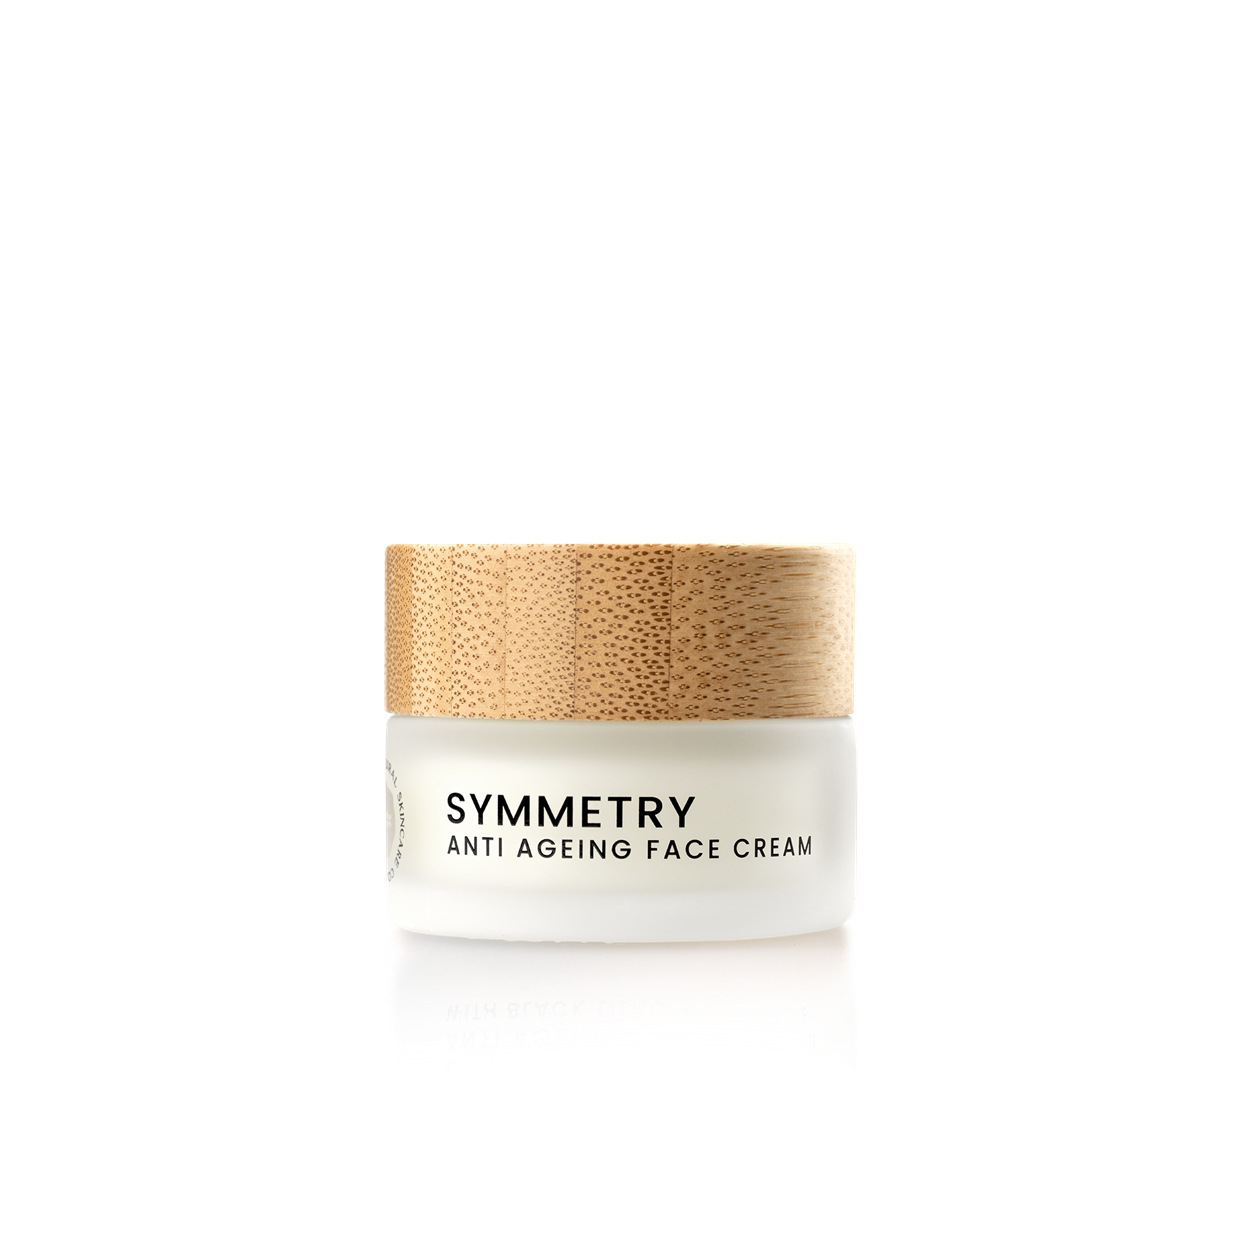 Symmetry Anti Ageing Face Cream - 15ml Travel Size